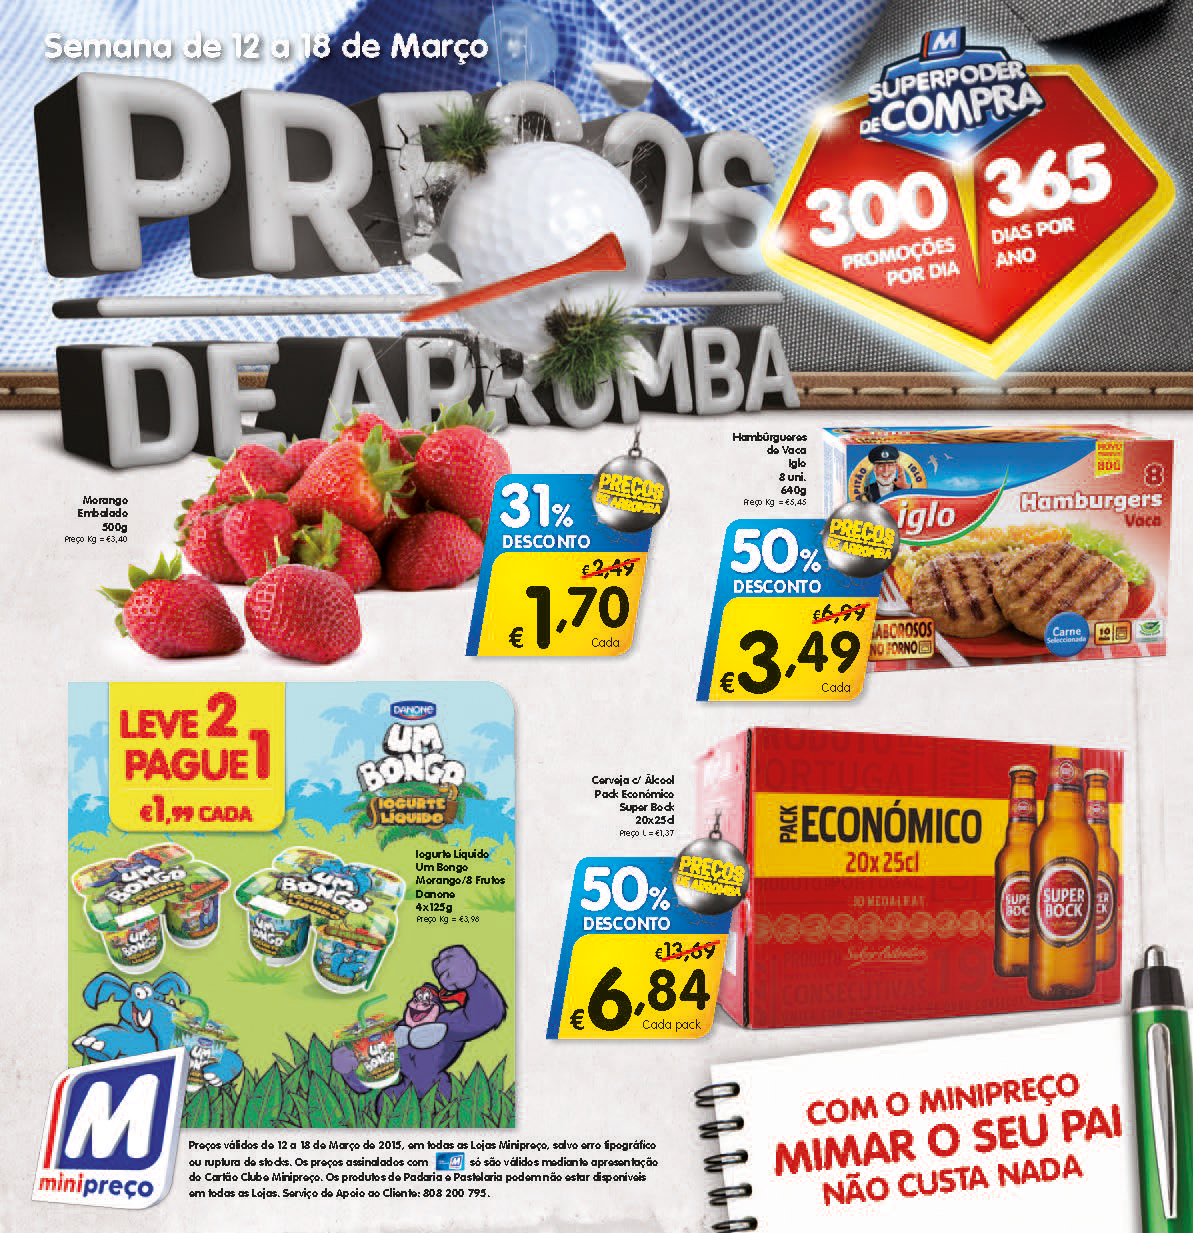 minipreço Supermarket supermercado folheto Headline Portugal retalho mercearia